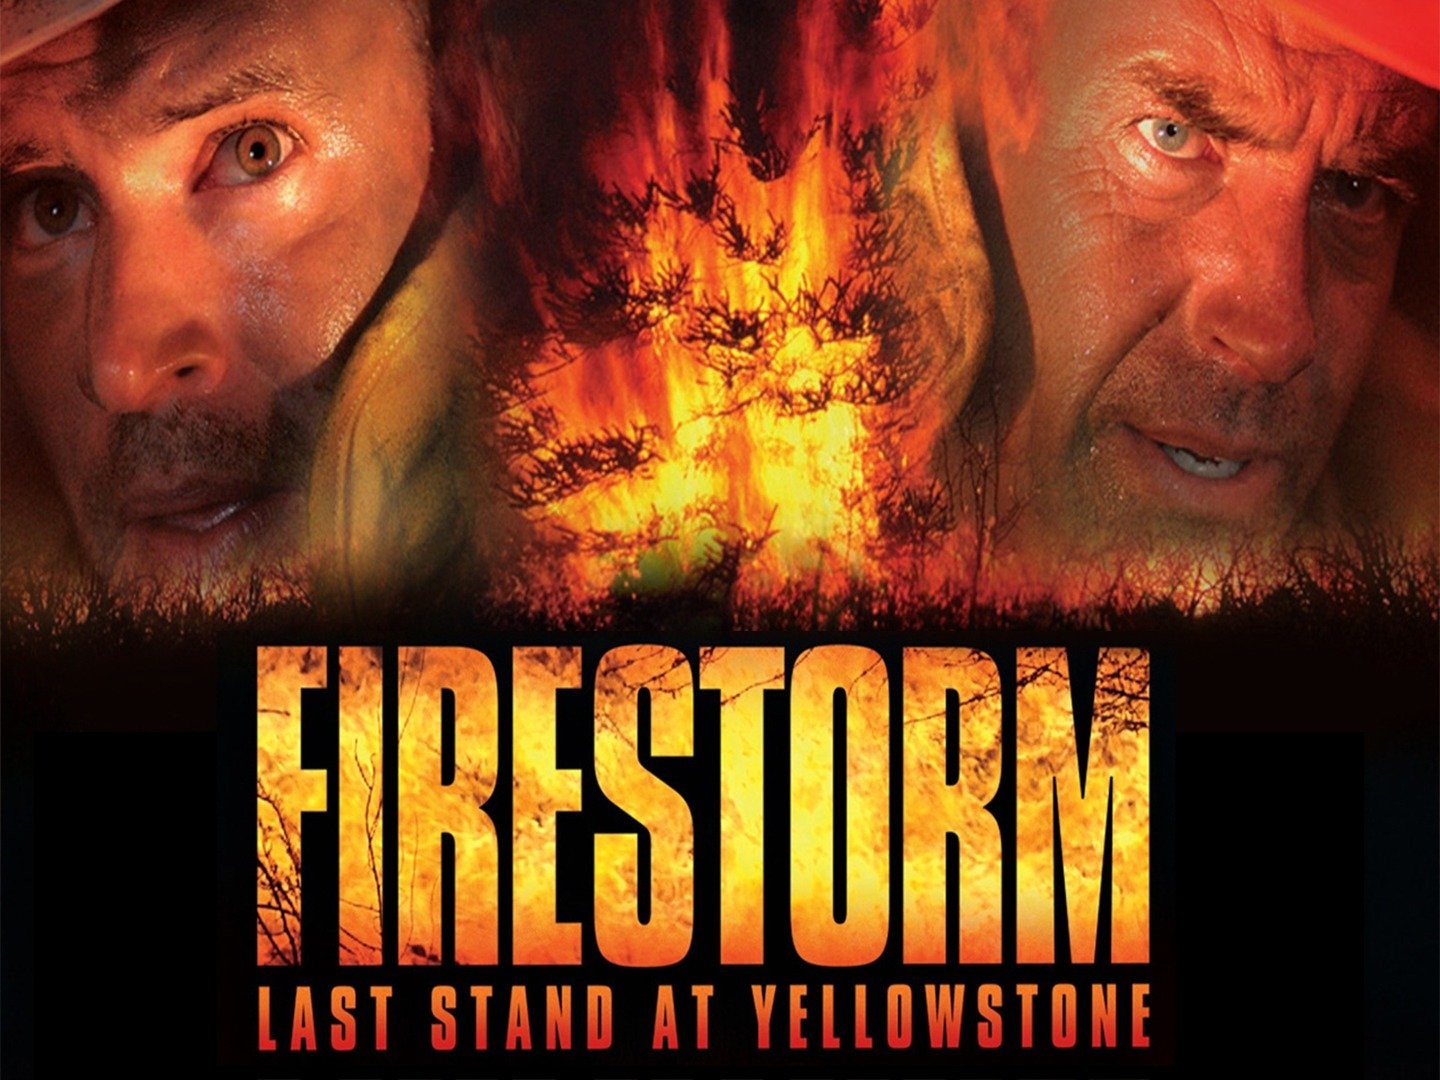 Firestorm: Last Squad Standing